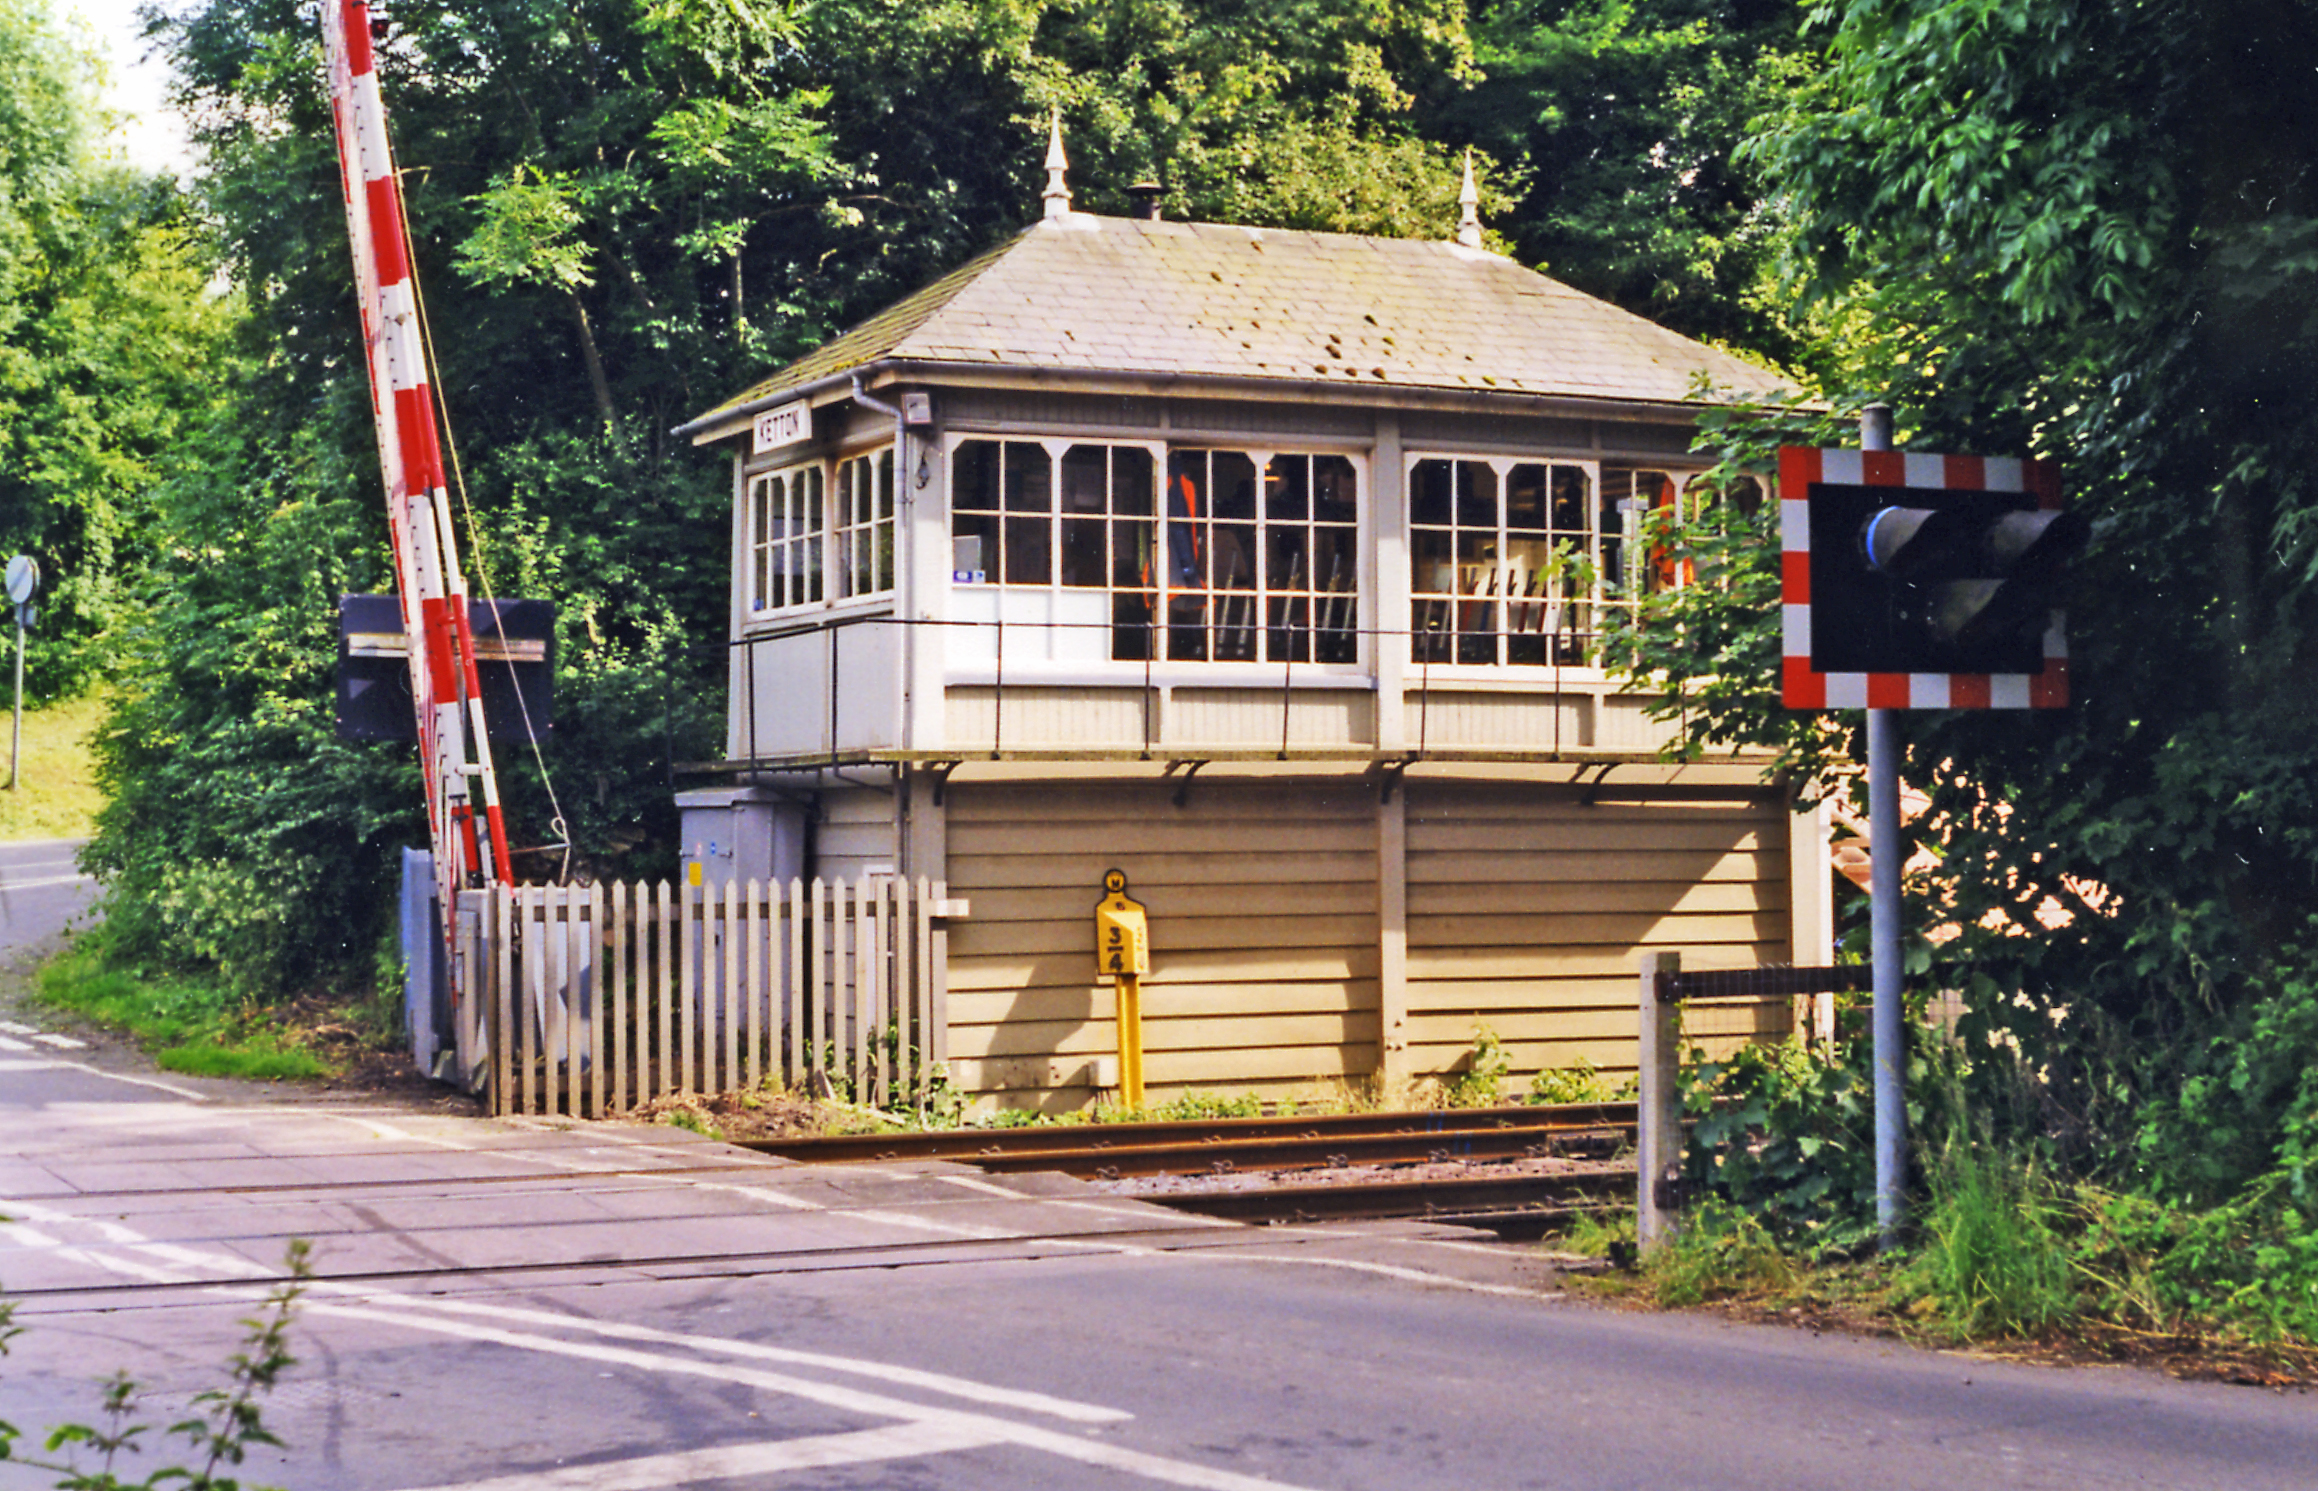 Ketton and Collyweston railway station